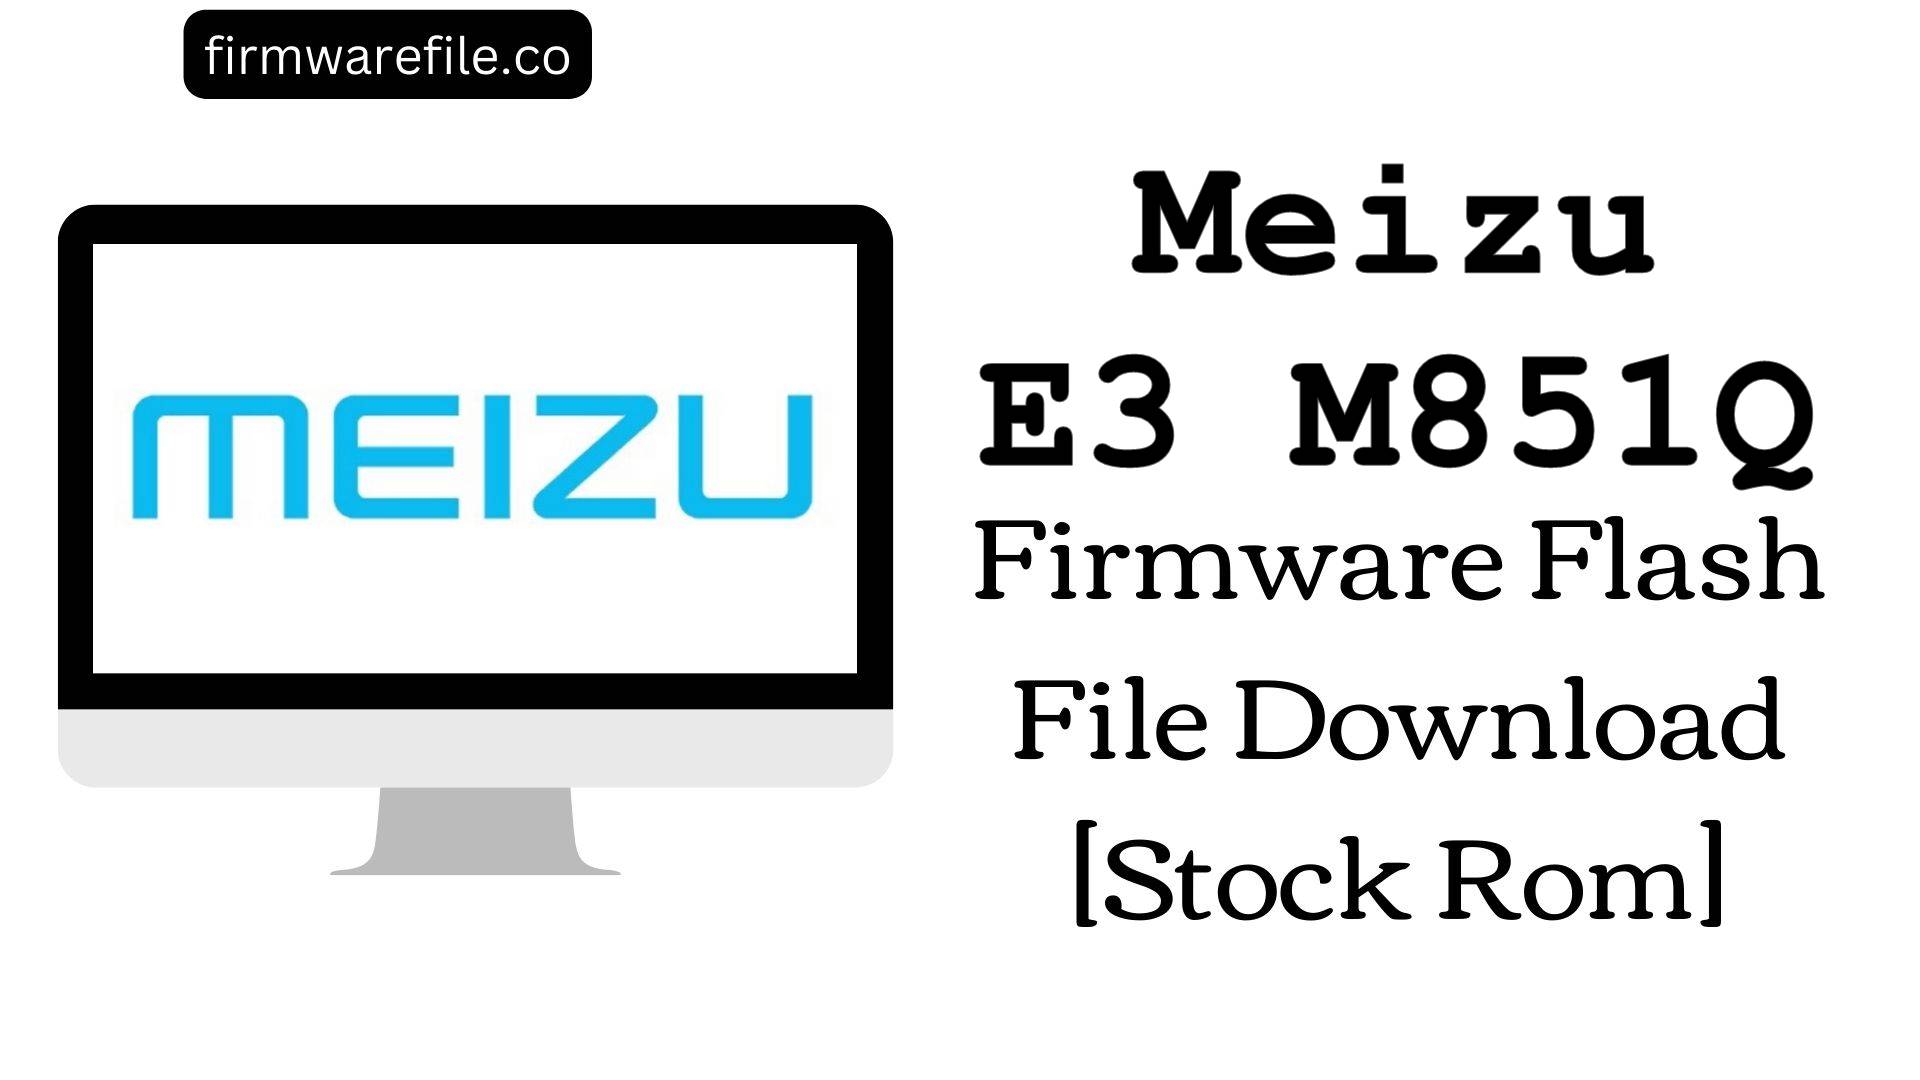 Meizu E3 M851Q